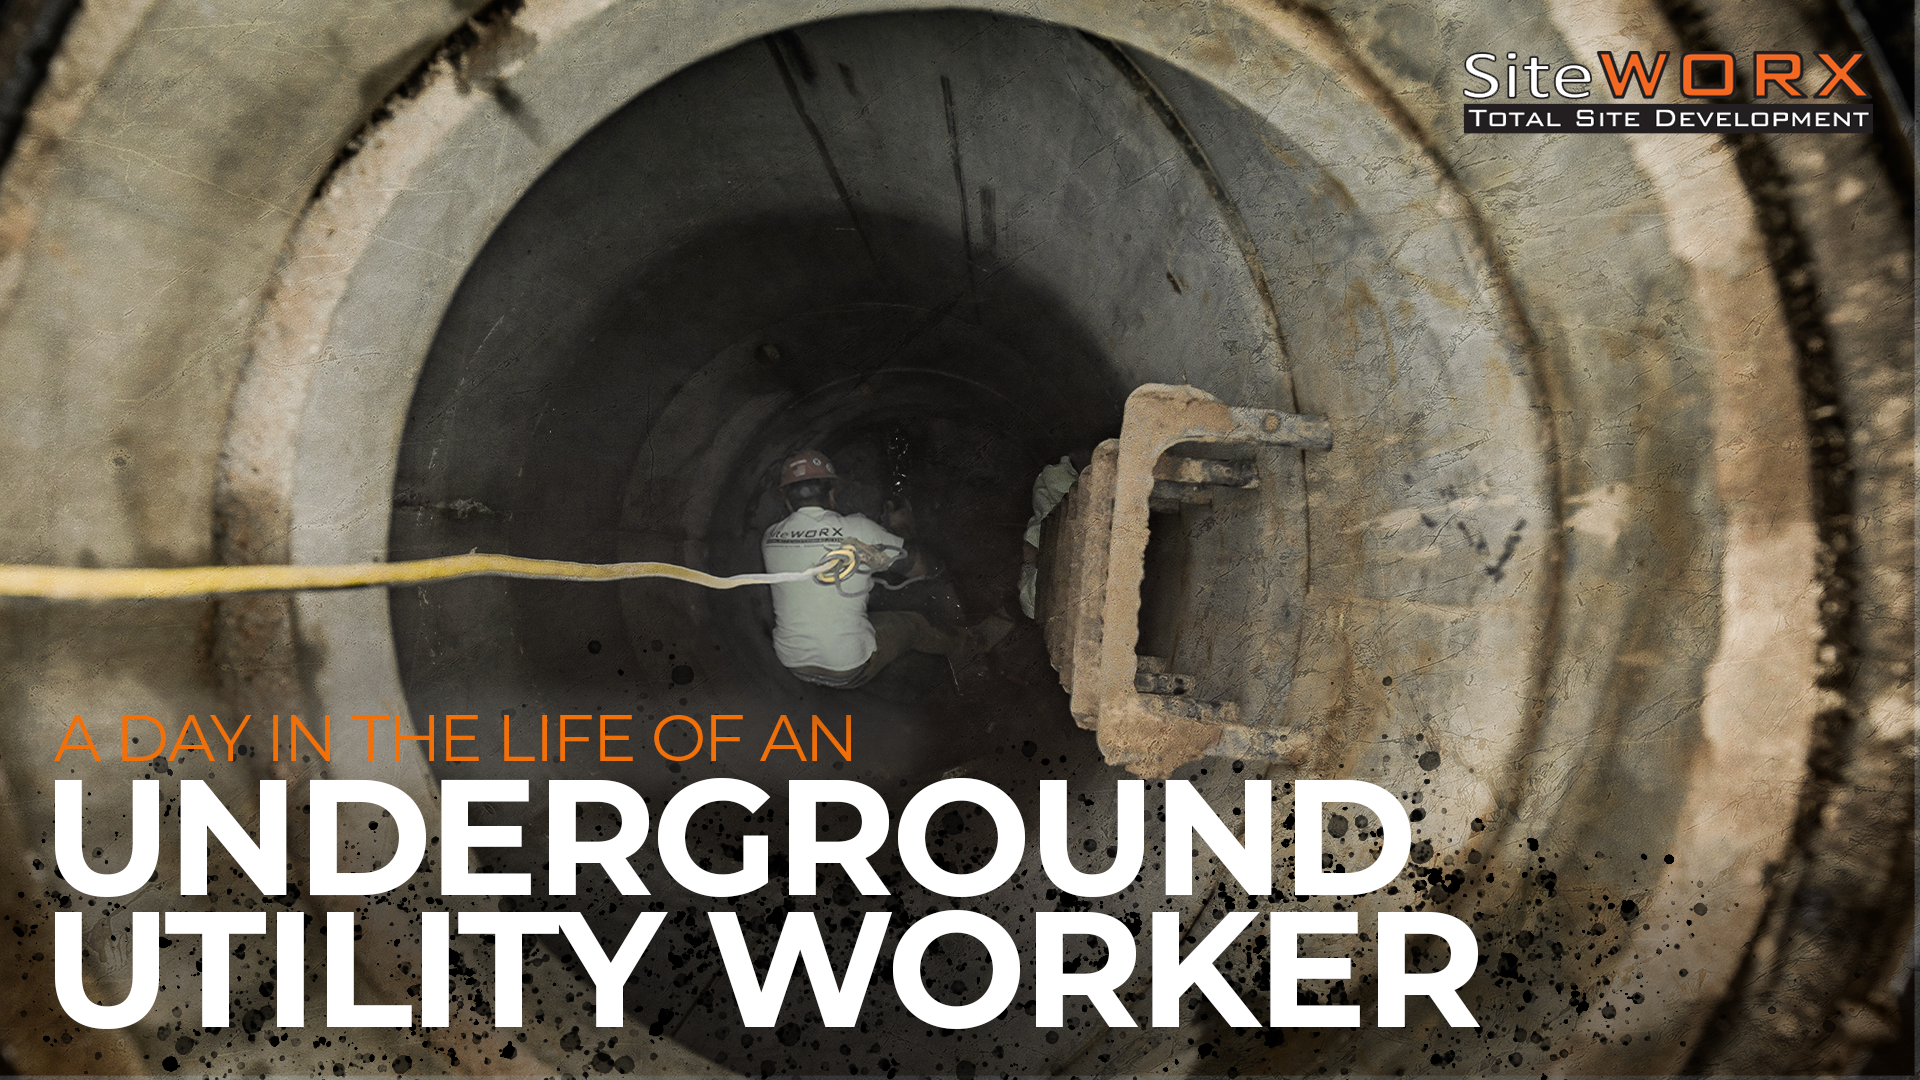 A man working in an underground pipe